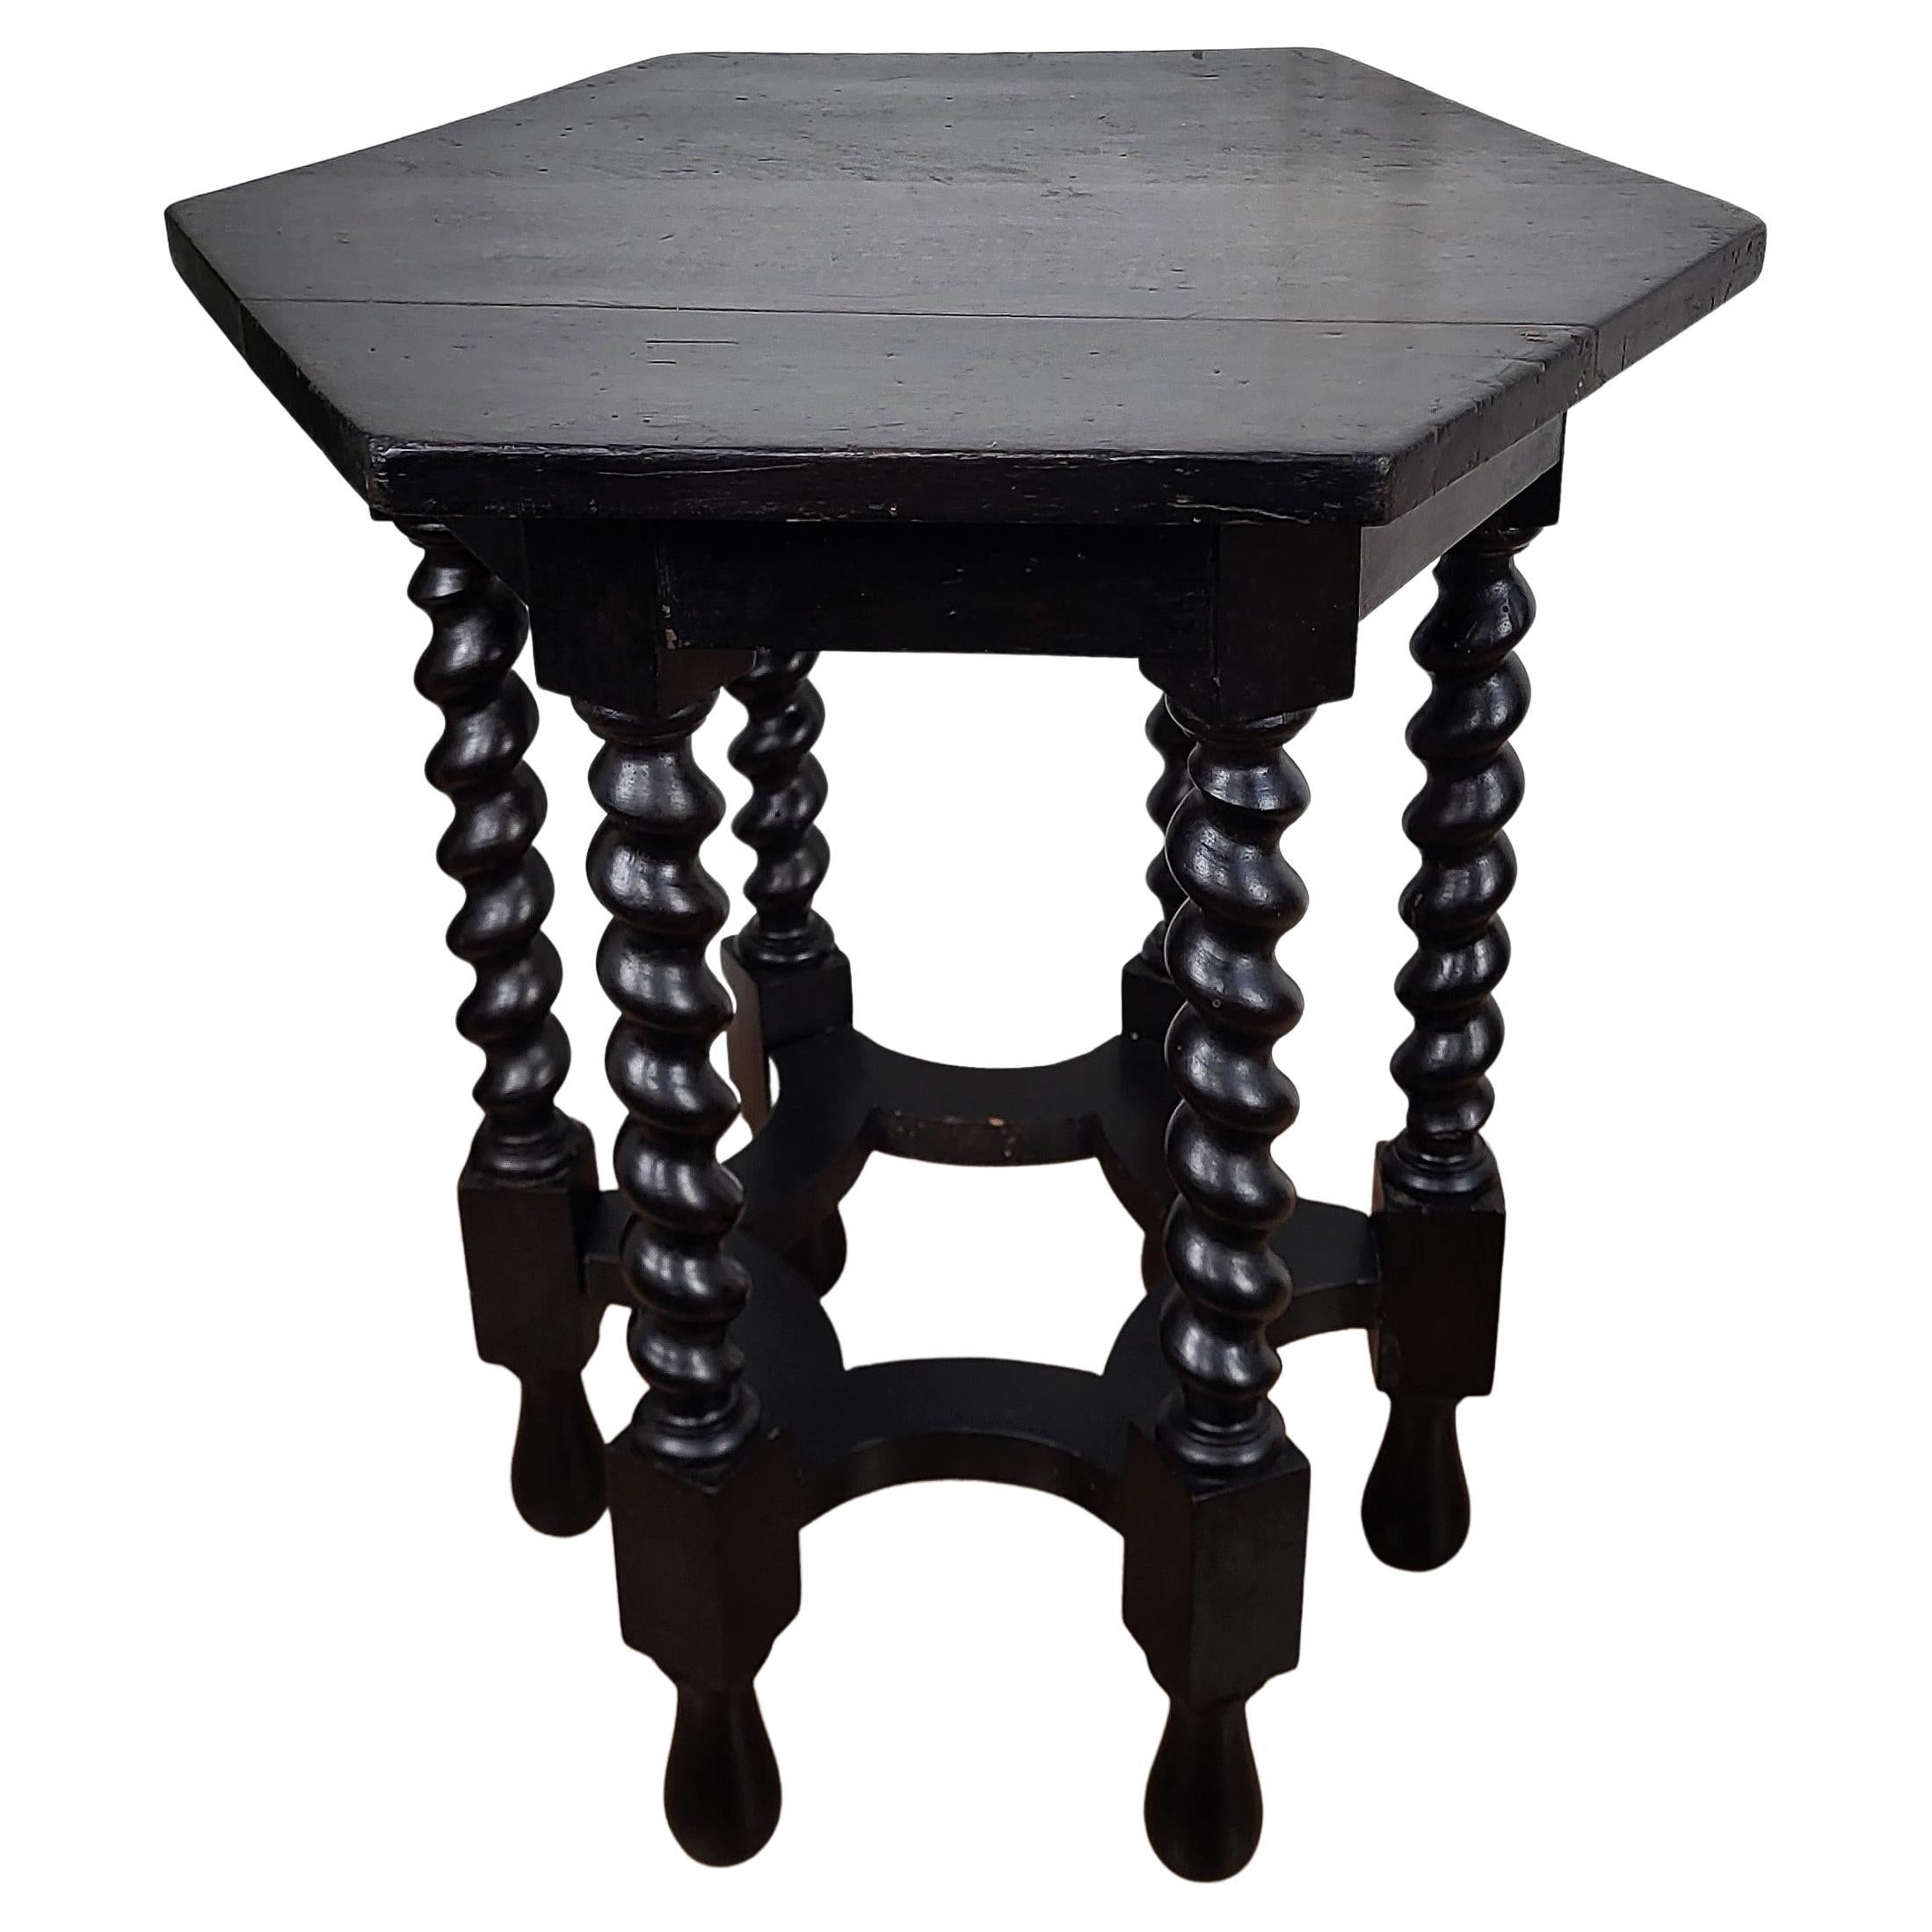 Antique Italian Hexagonal Black Walnut Side Table Stool with Bobbin Turned Legs